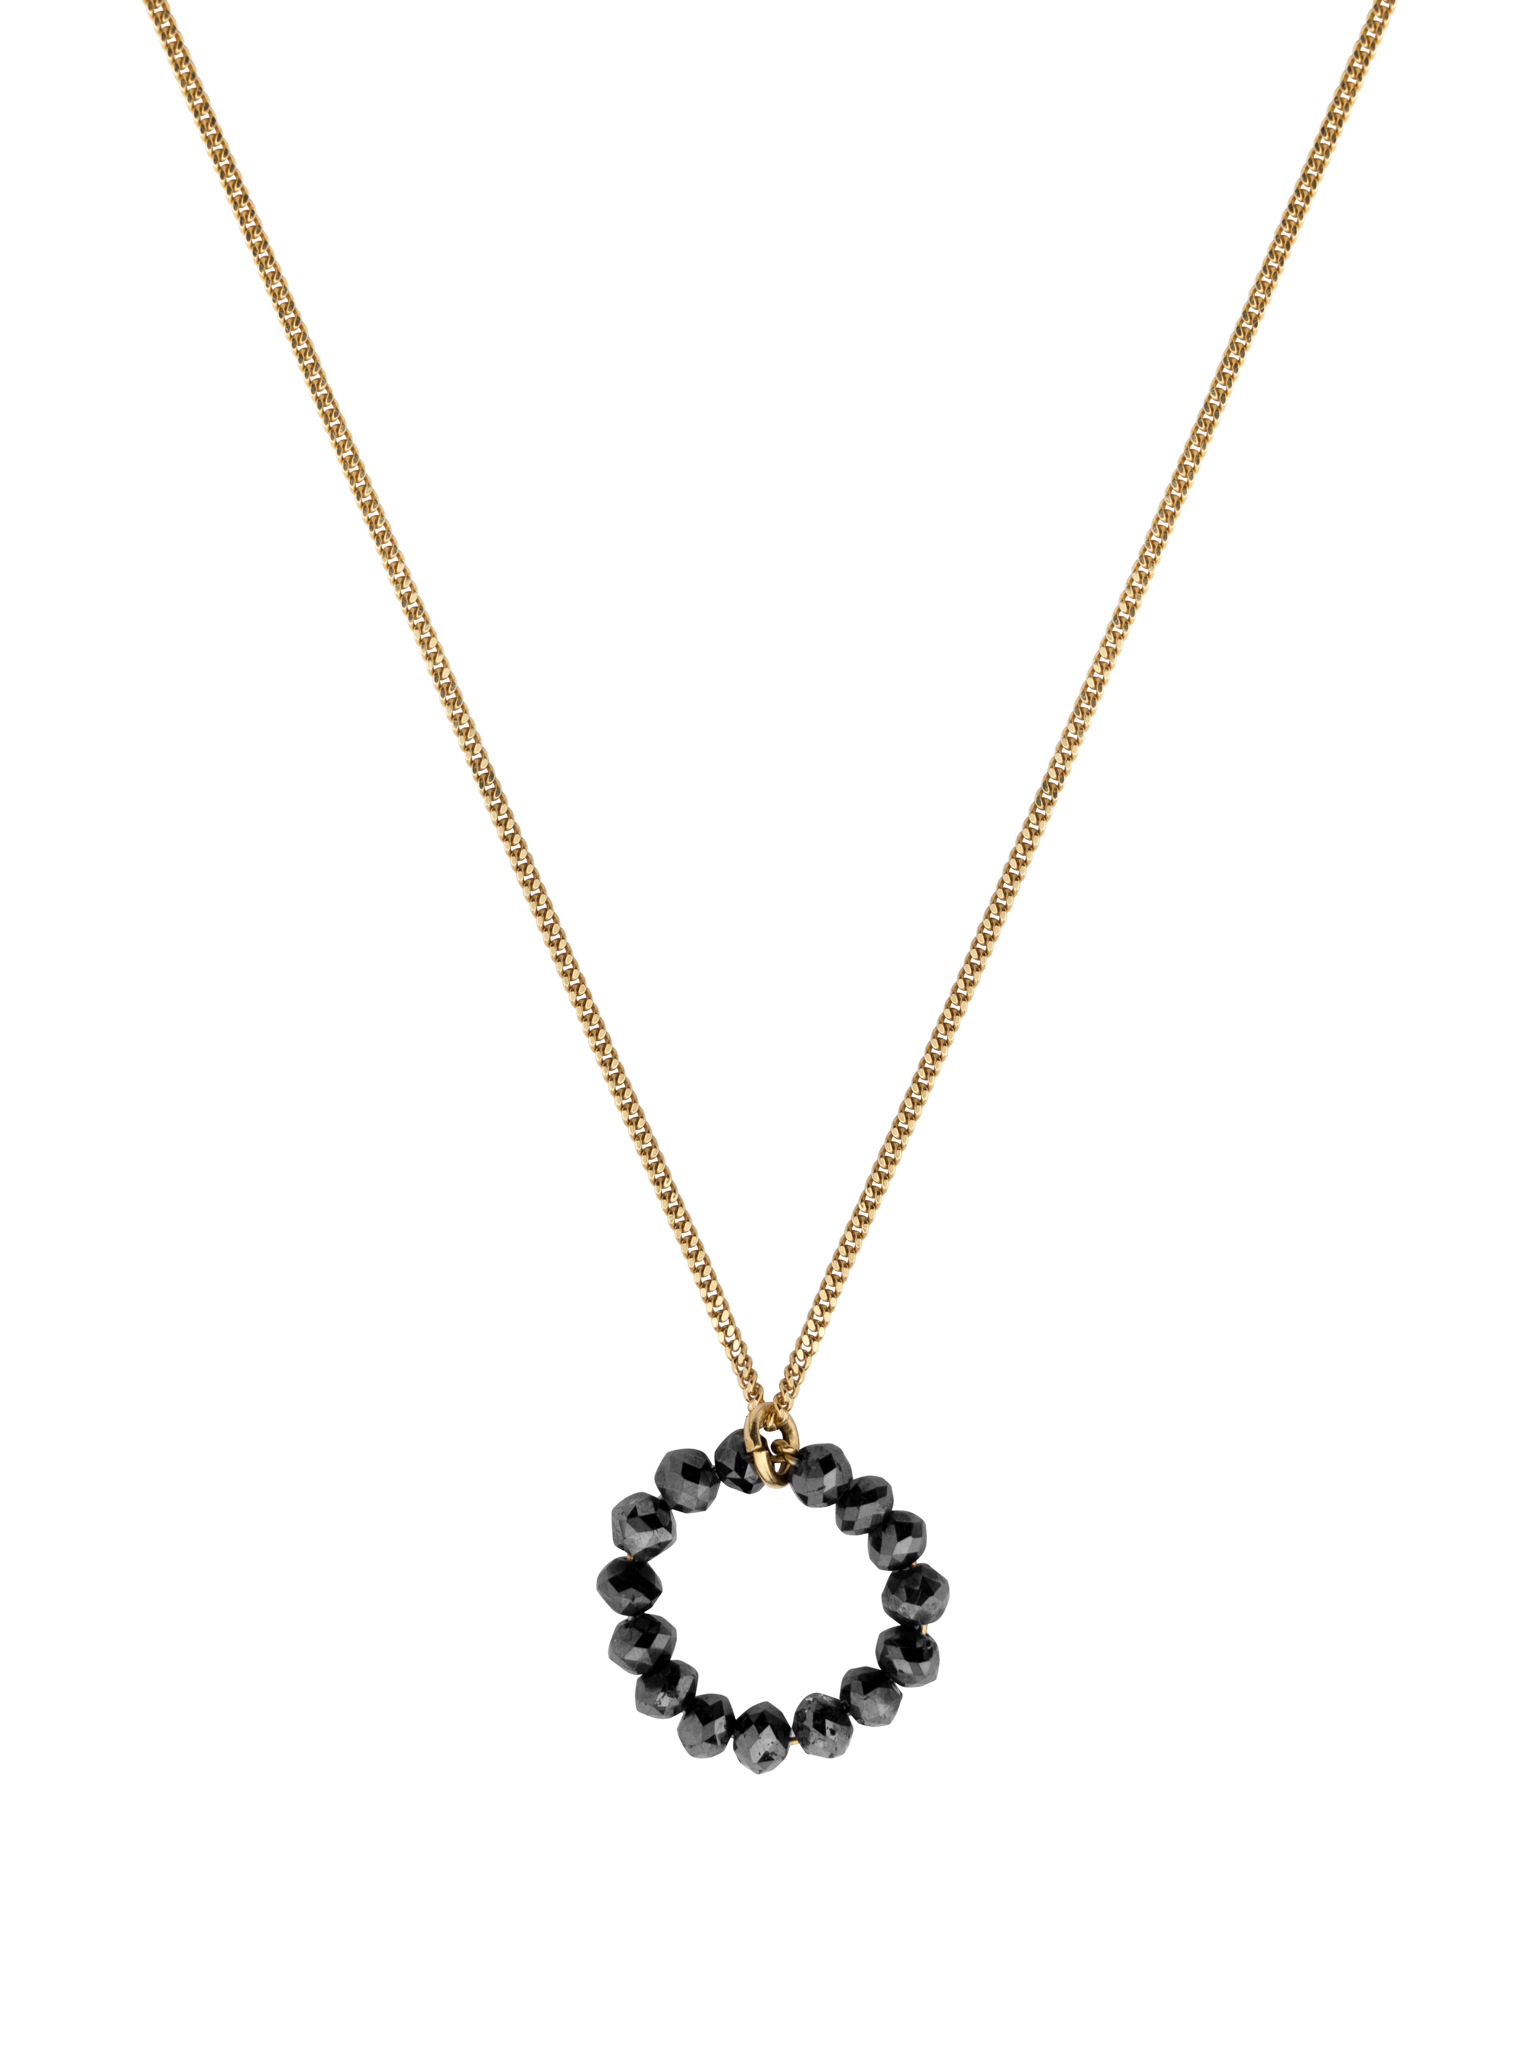 Black diamond halo necklace